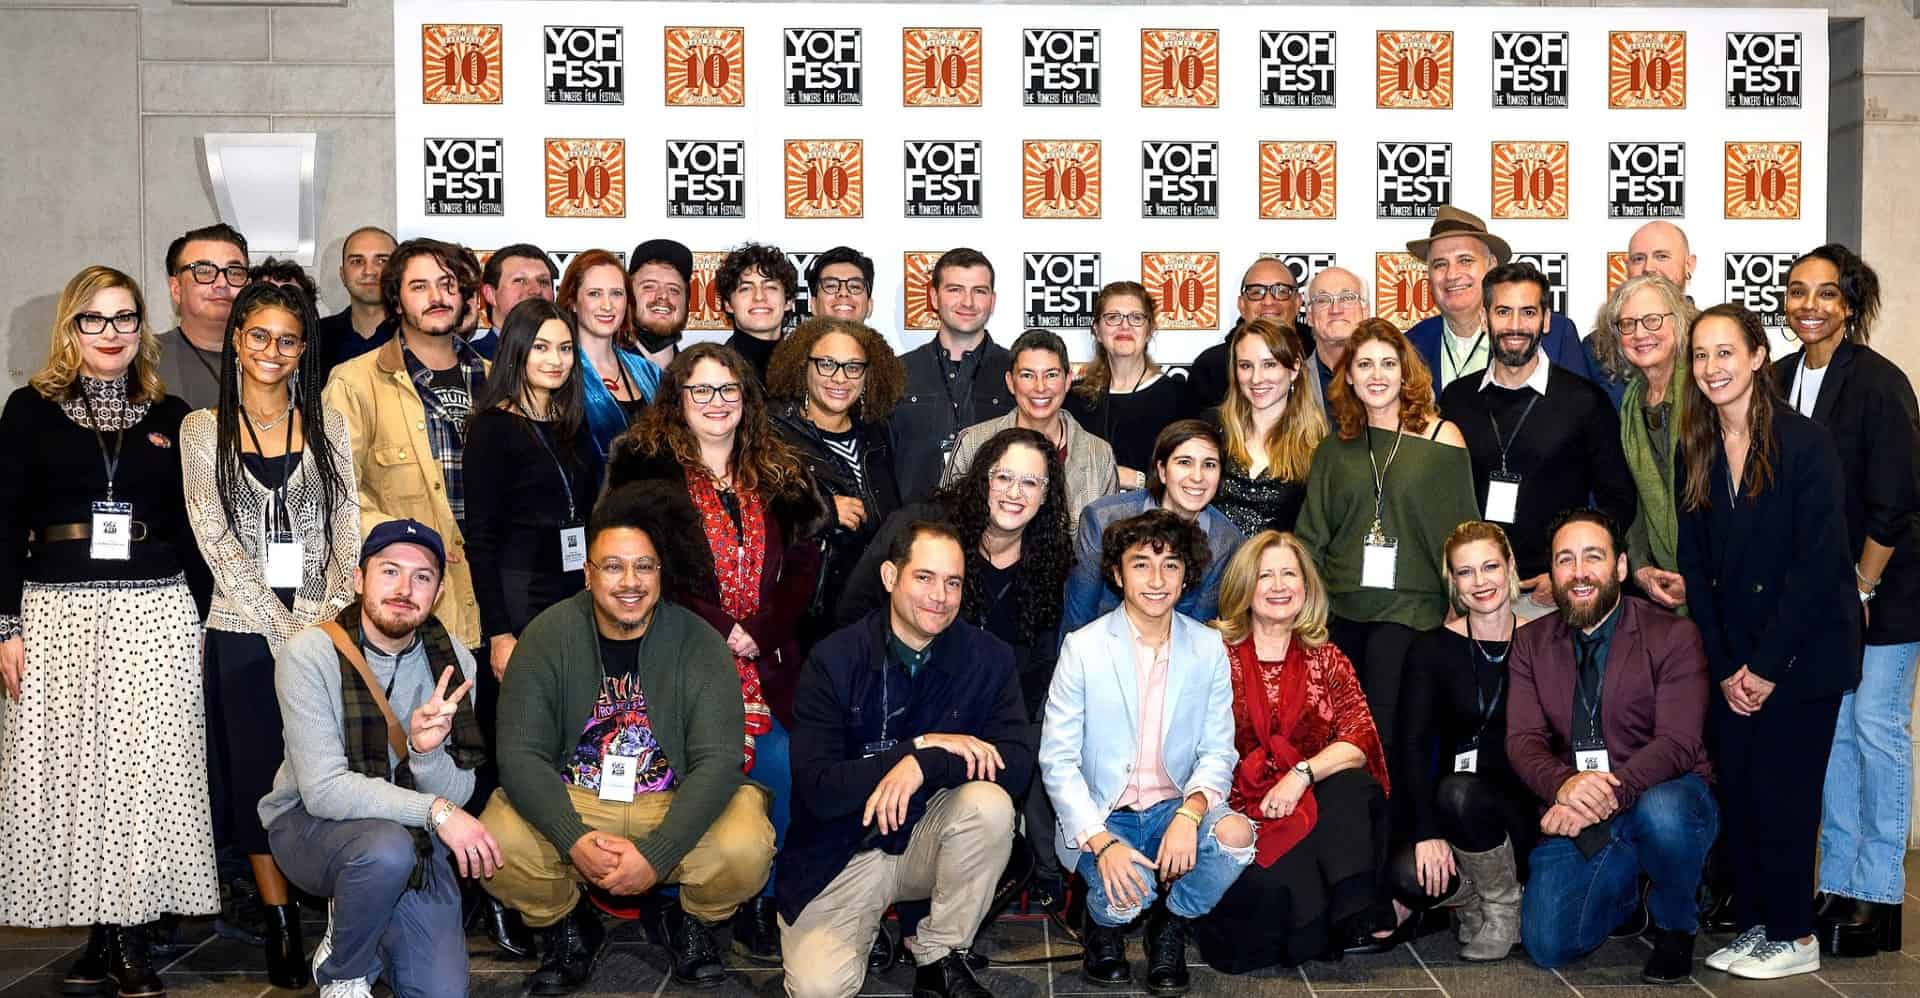 WFMU's Inaugural Radiovision Festival hits NYC in October - Radio Survivor